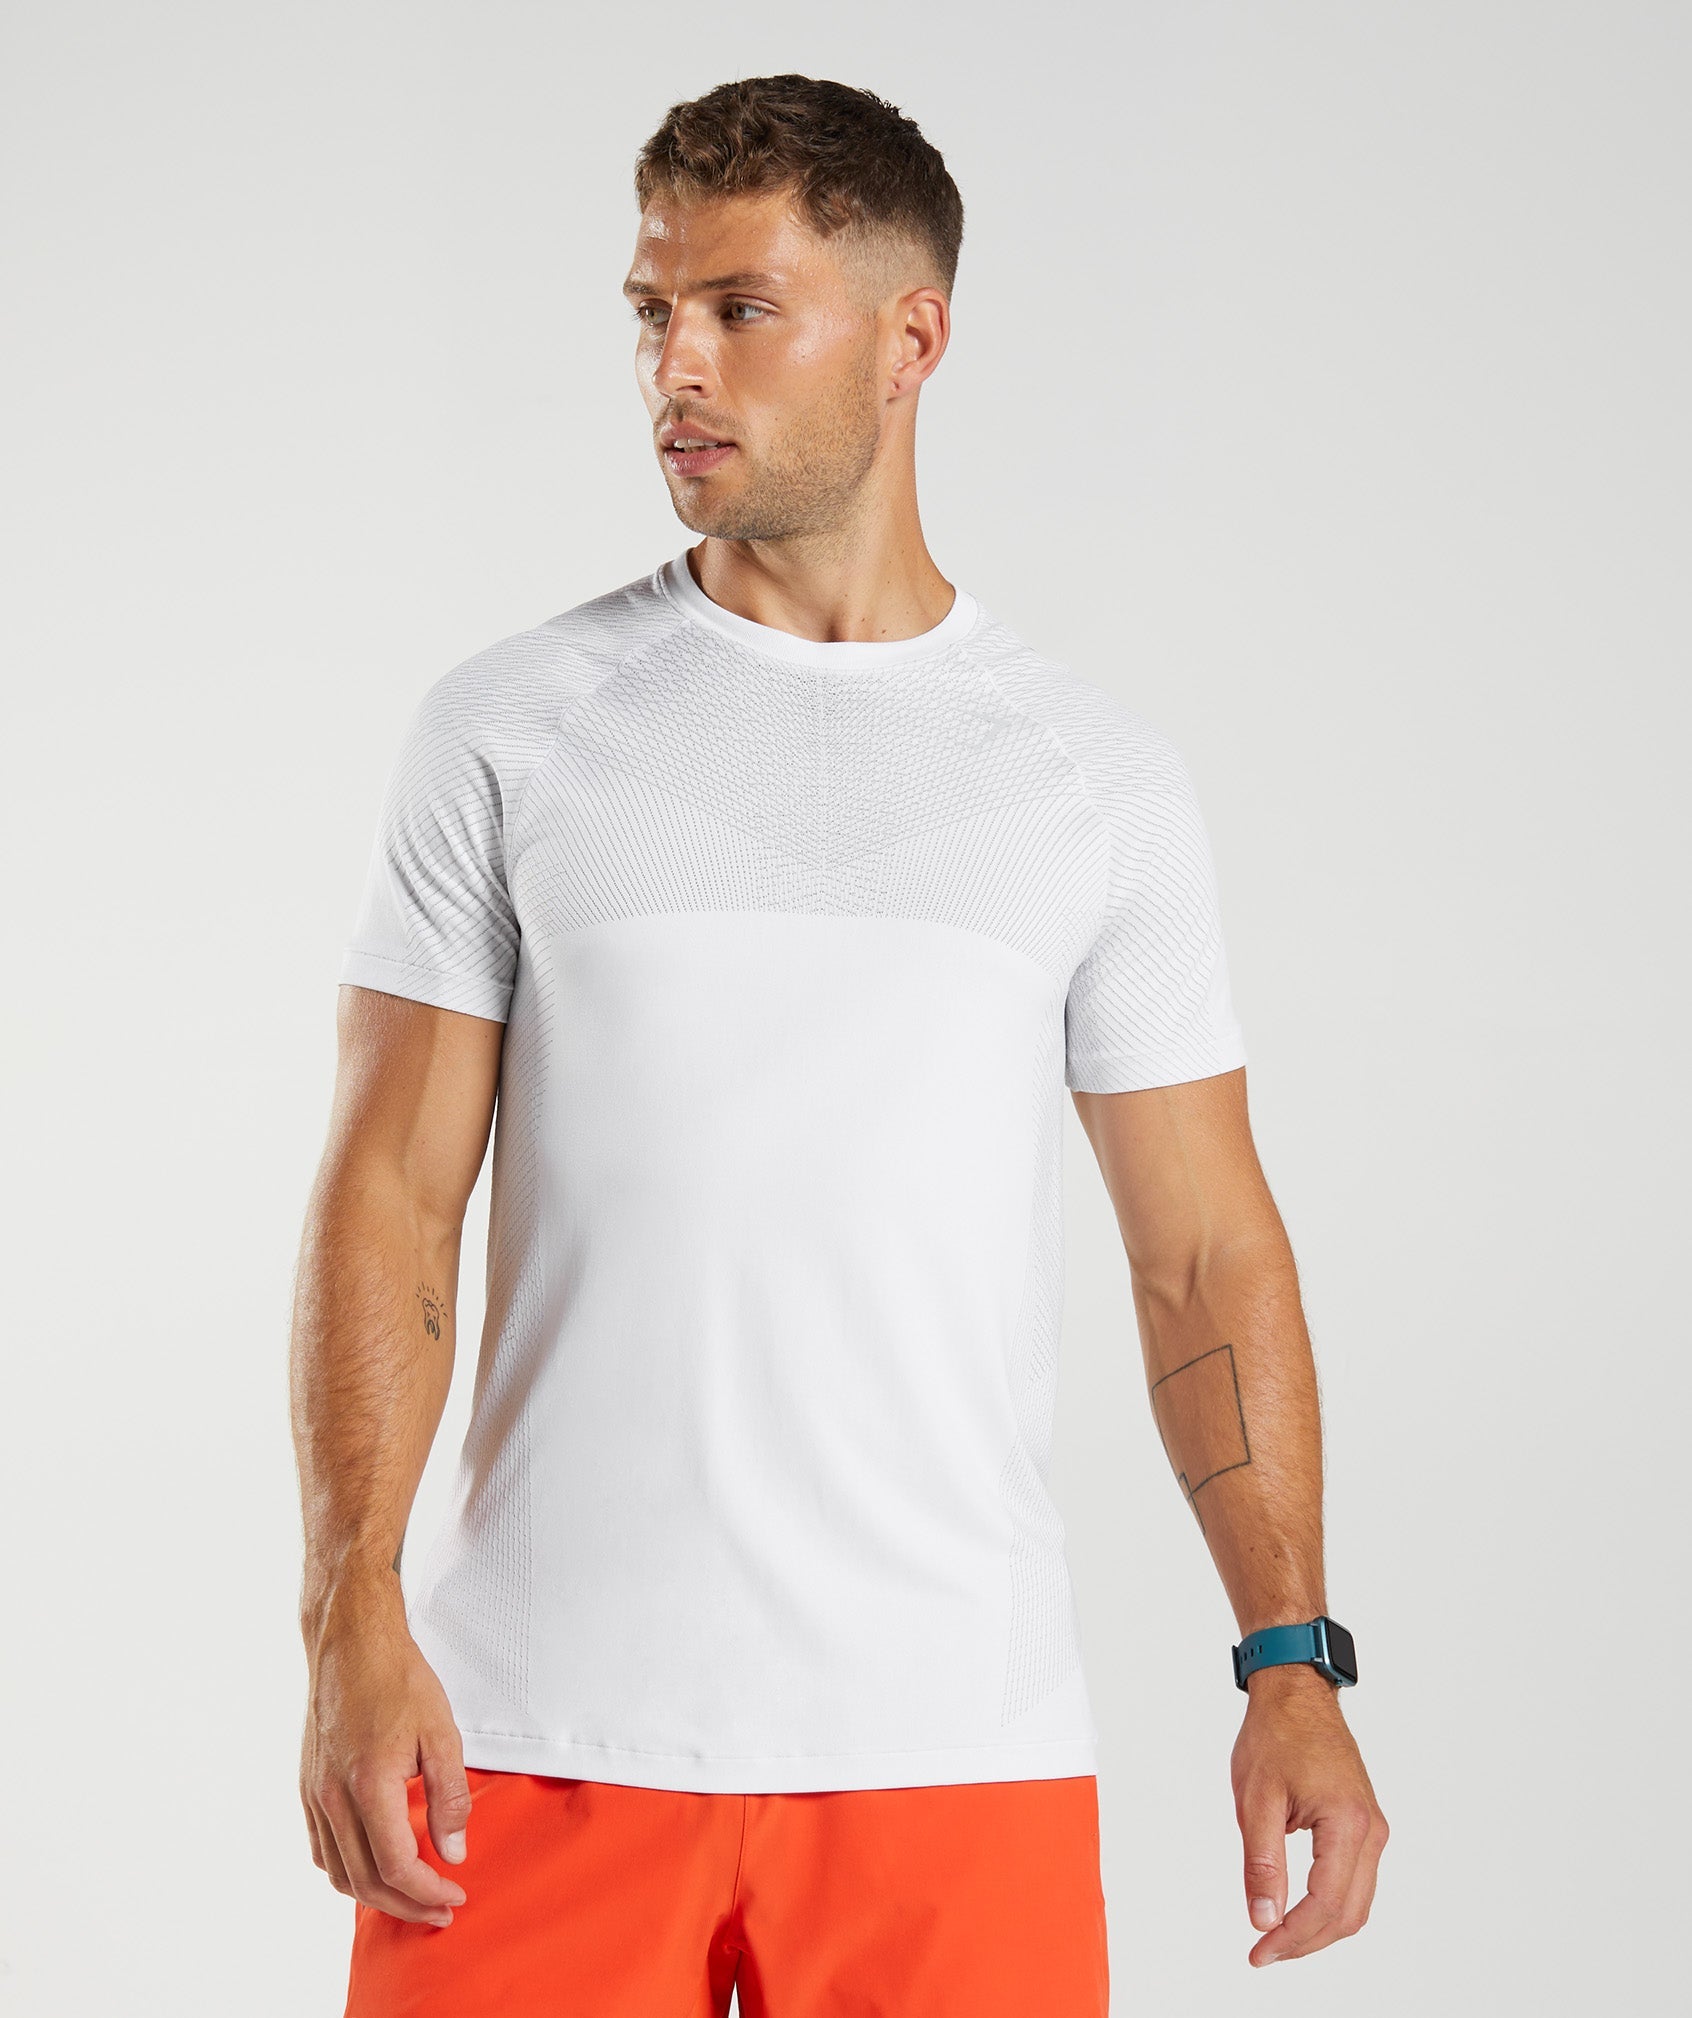 Gymshark Apex Seamless T-Shirt - White/Light Grey